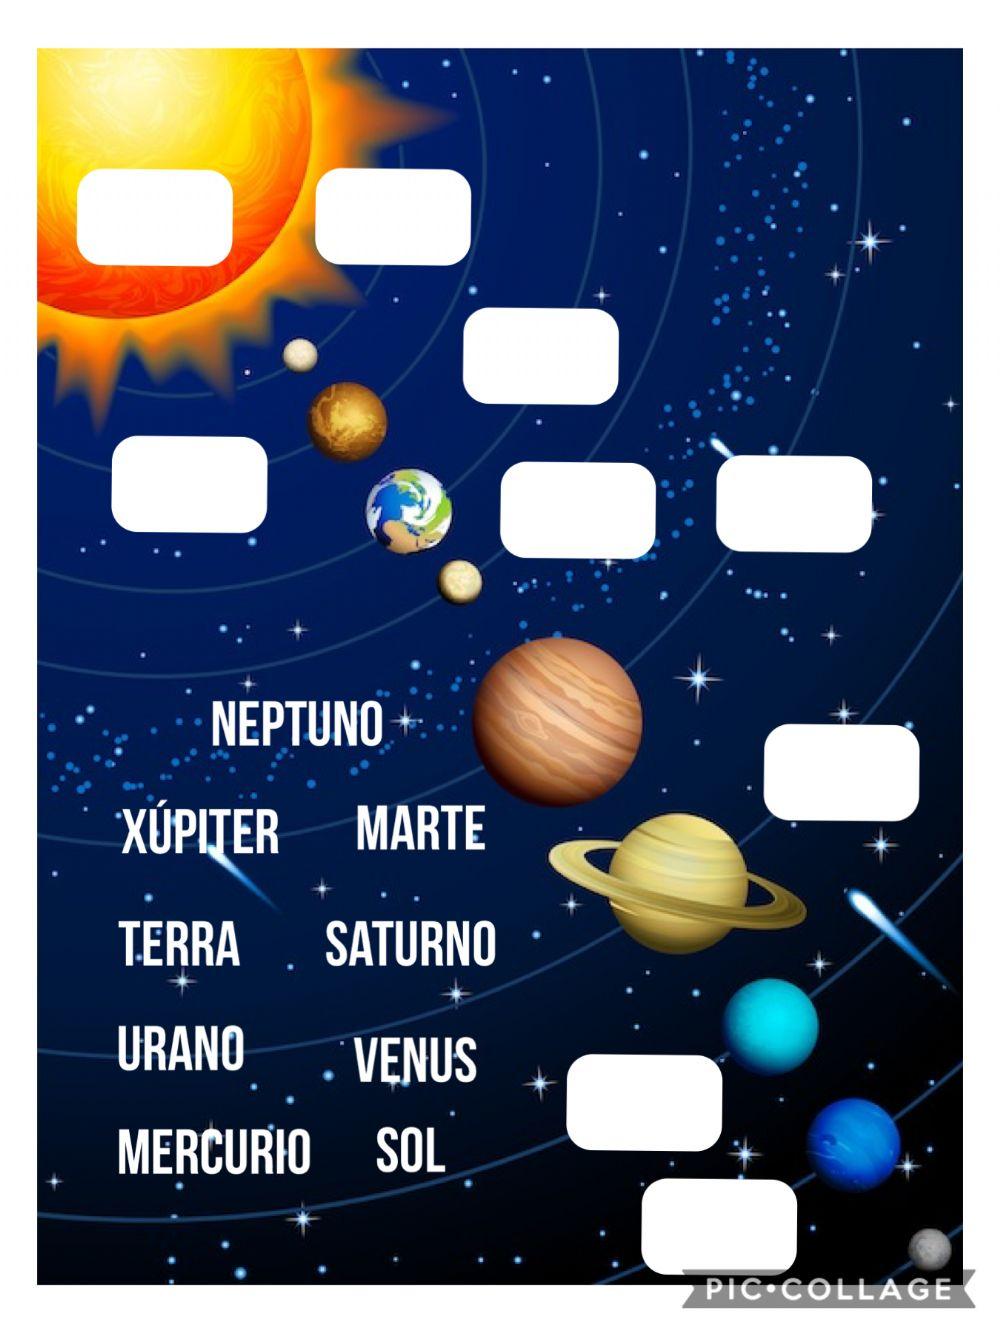 O sistema solar